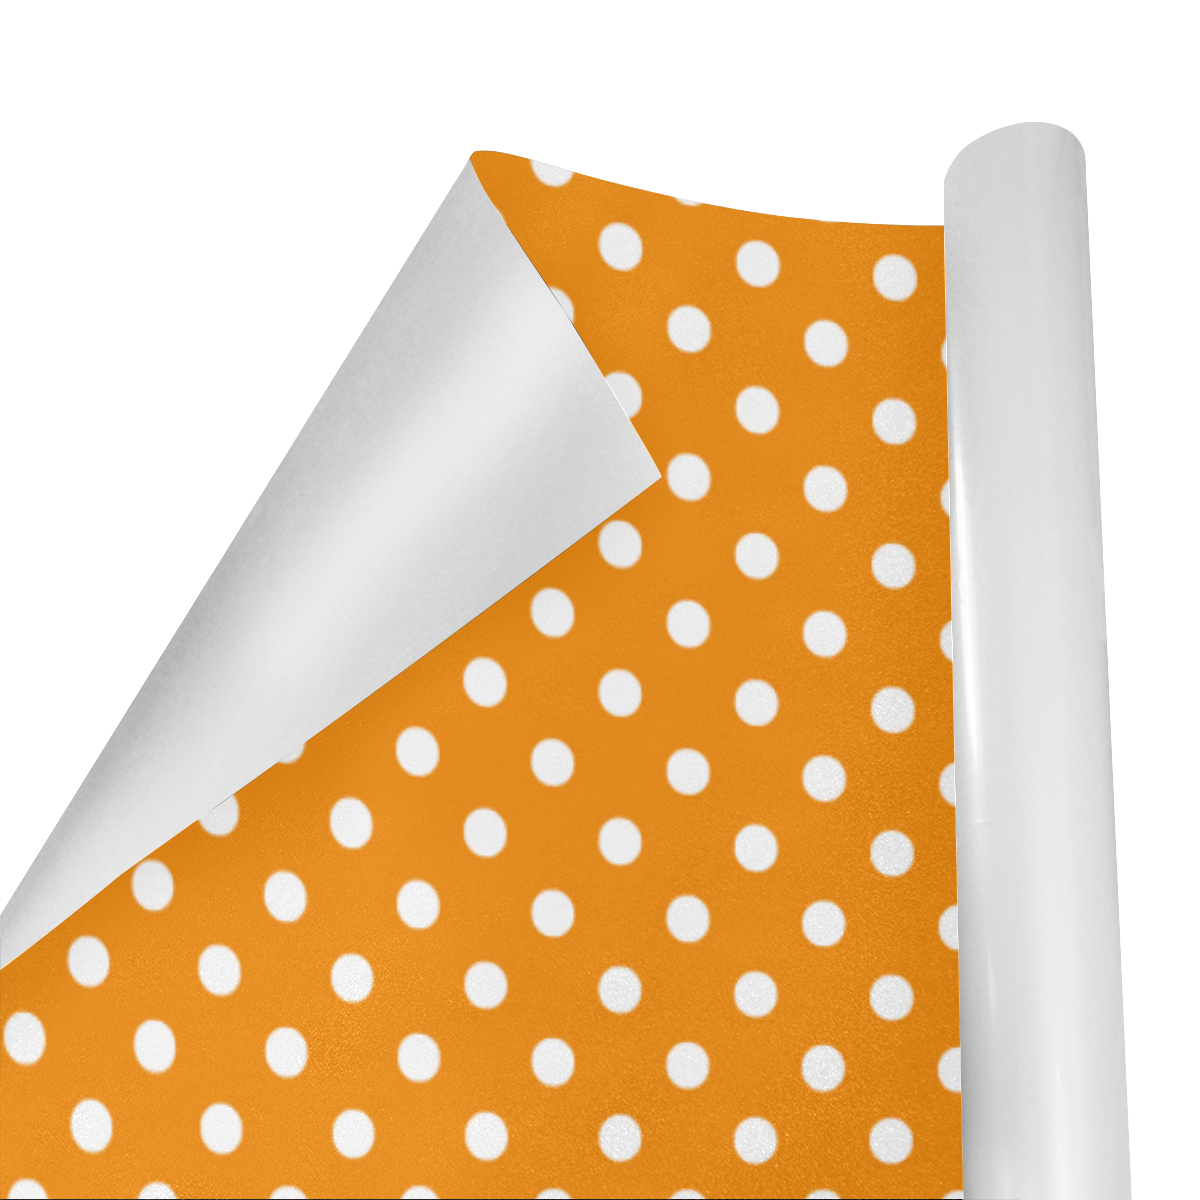 White Polka Dots on Tangerine Orange Gift Wrapping Paper 58"x 23" (3 Rolls)